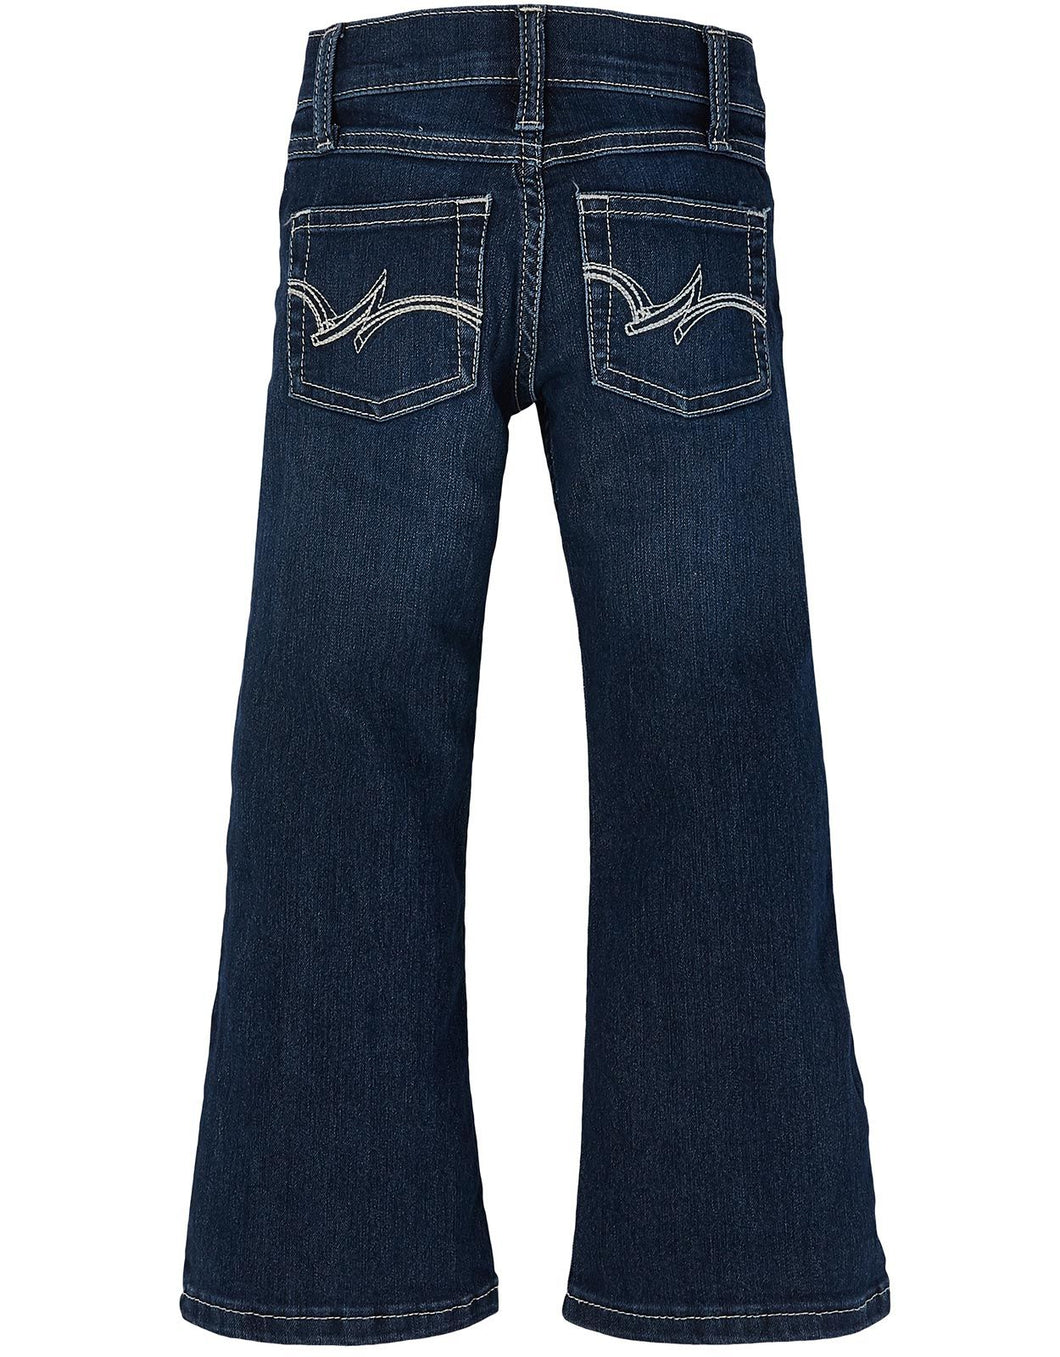 Wrangler Girls' Dark Wash Boot Cut Jeans